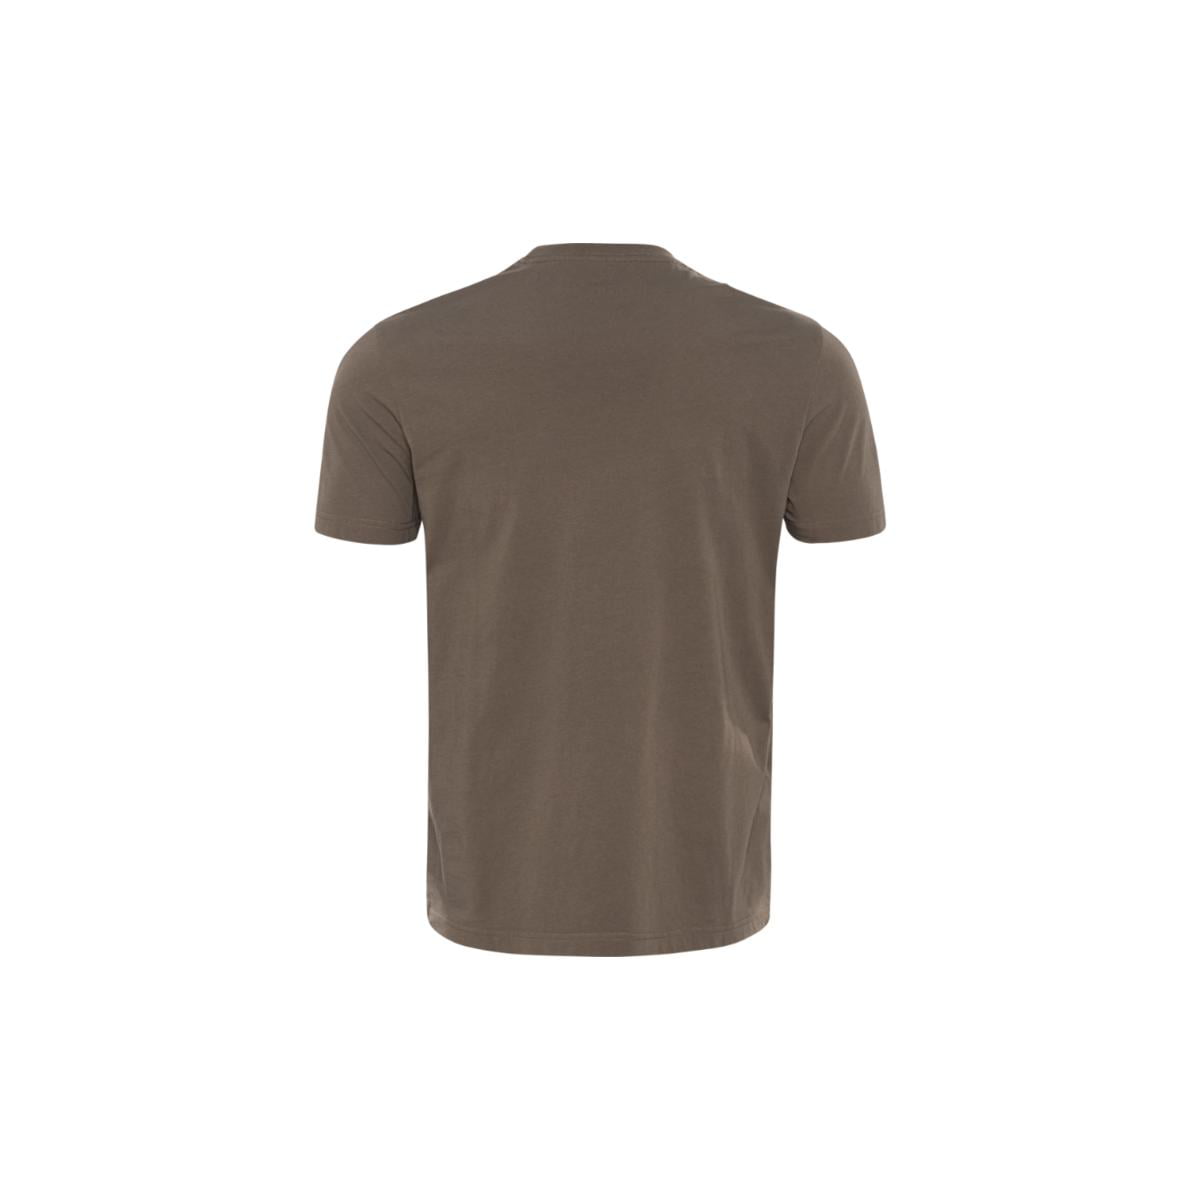 Harkila Core t-shirt Brown granite Walmart.com